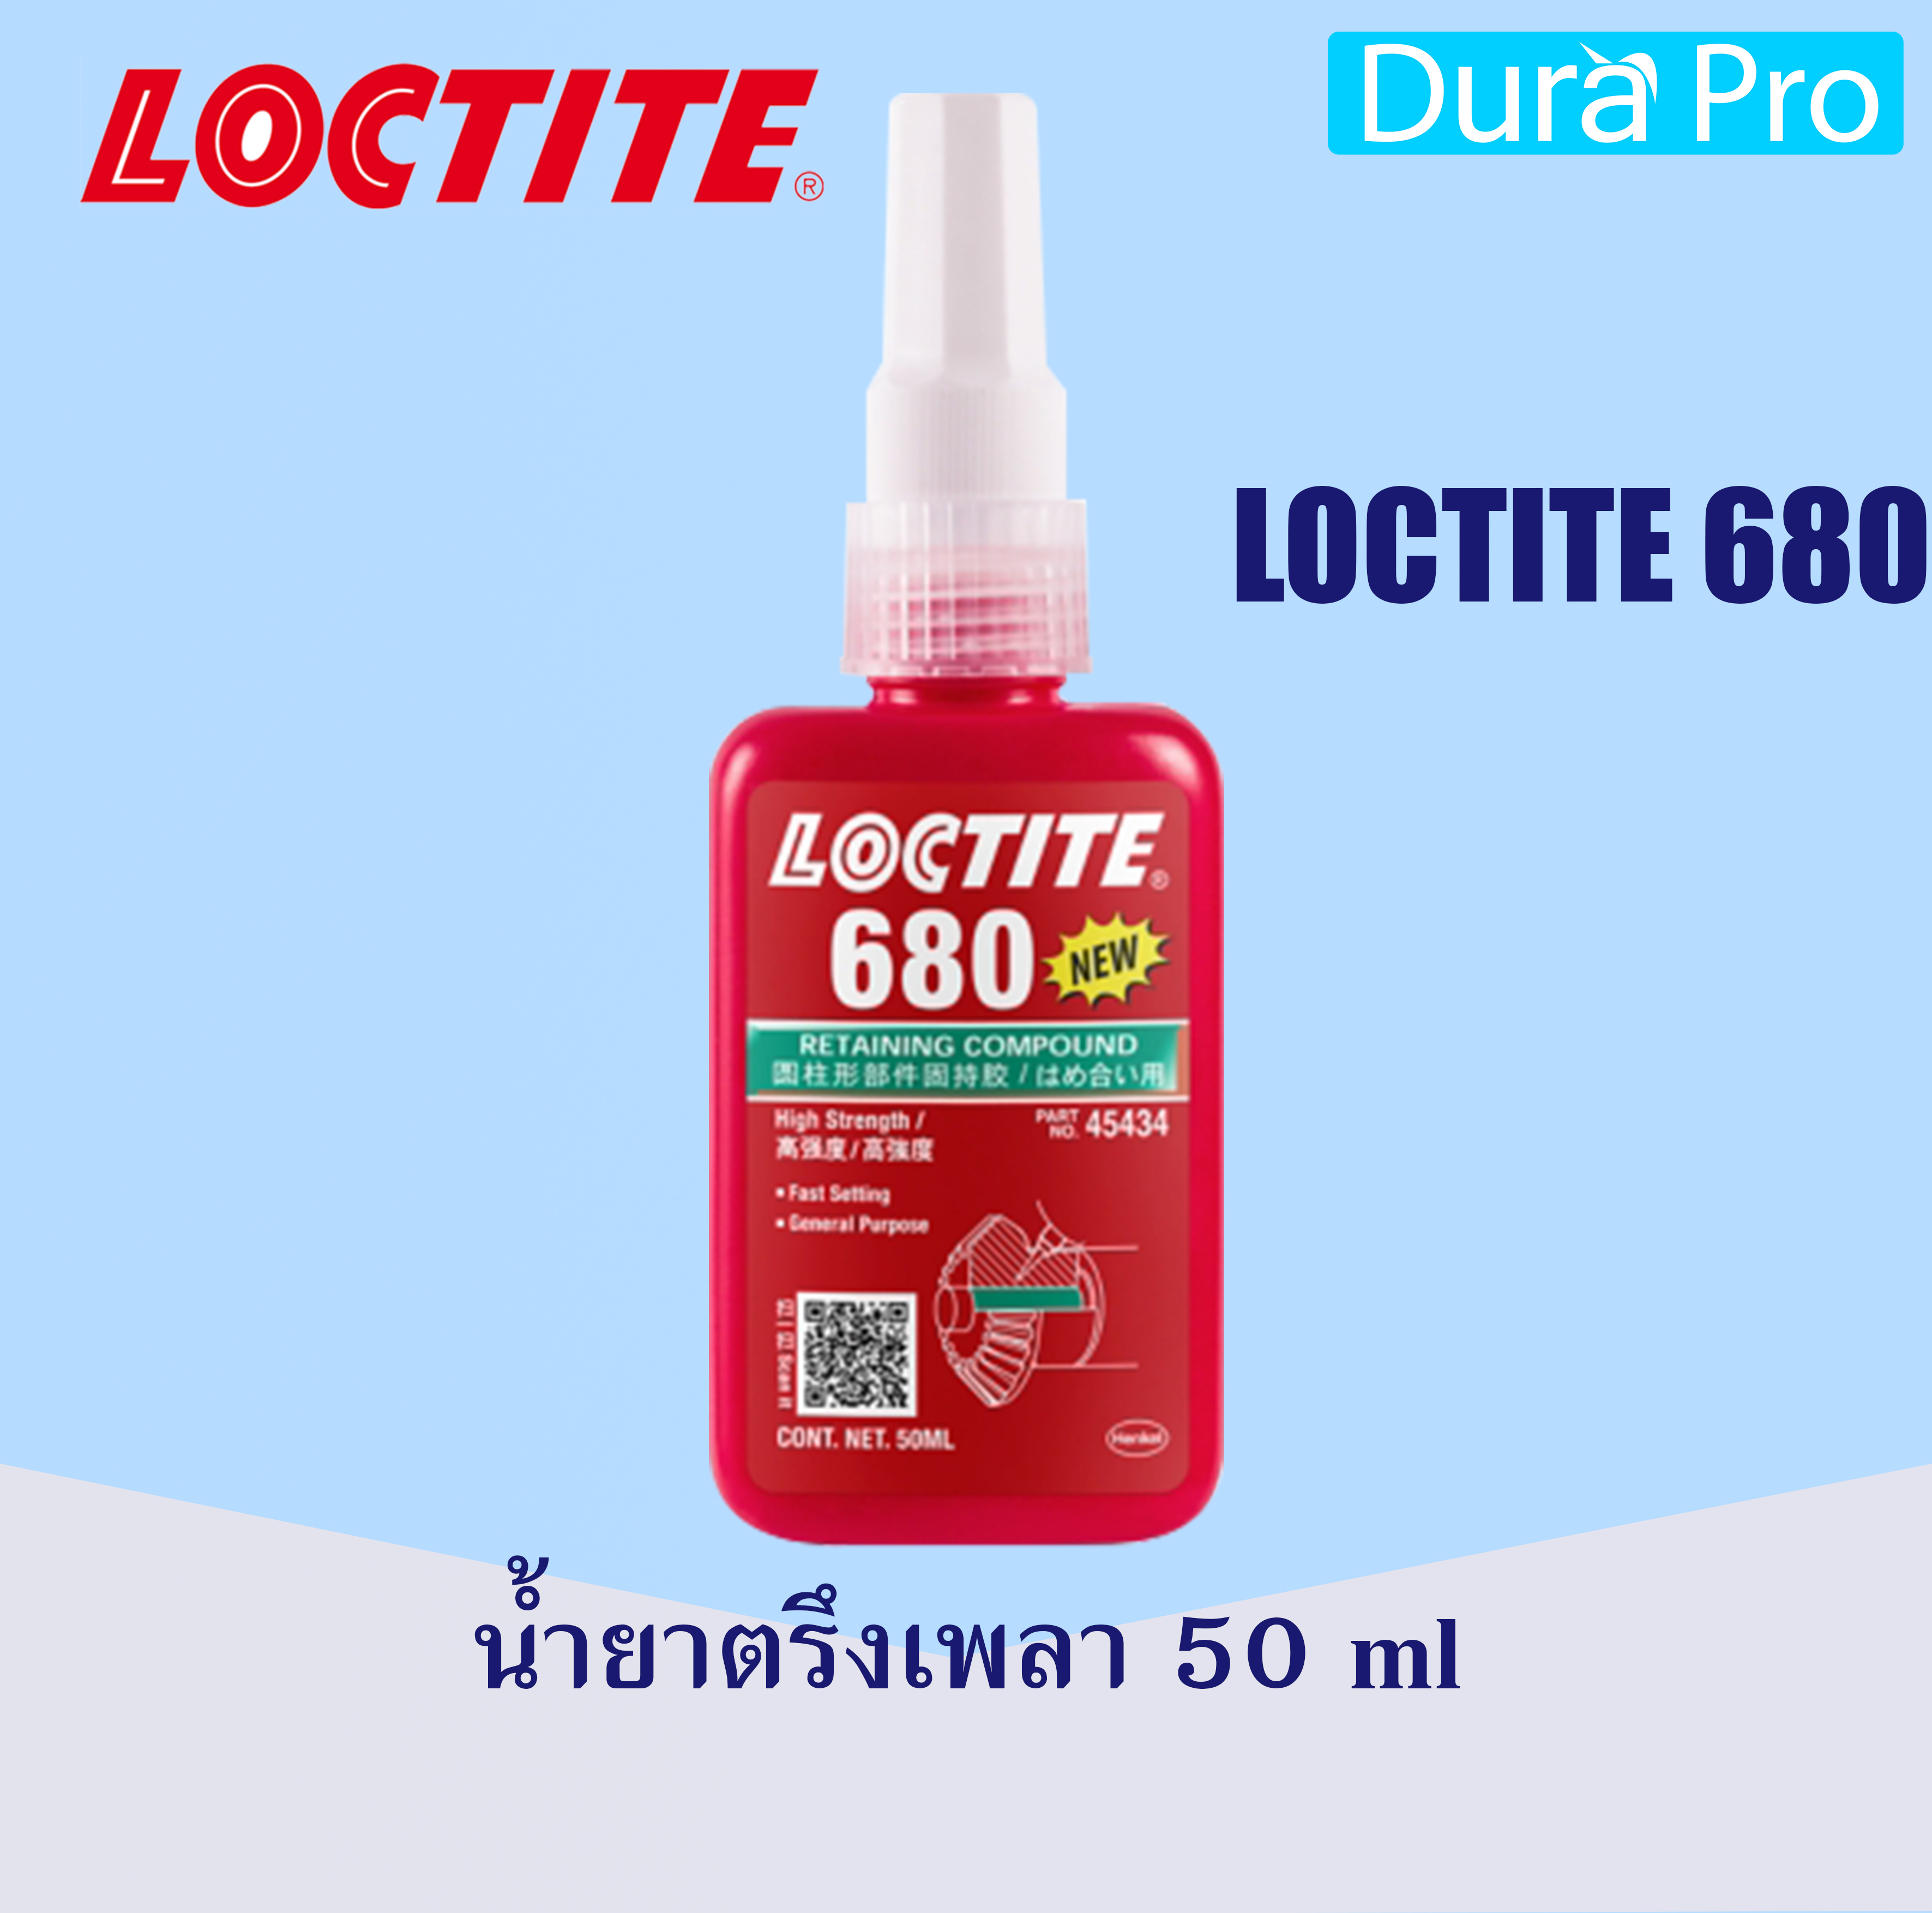 LOCTITE 680 RETAINING COMPOUND ( ล็อคไทท์ ) น้ำยาล็อคเกลียวขนาด 50 ml จัดจำหน่ายโดย Dura Pro